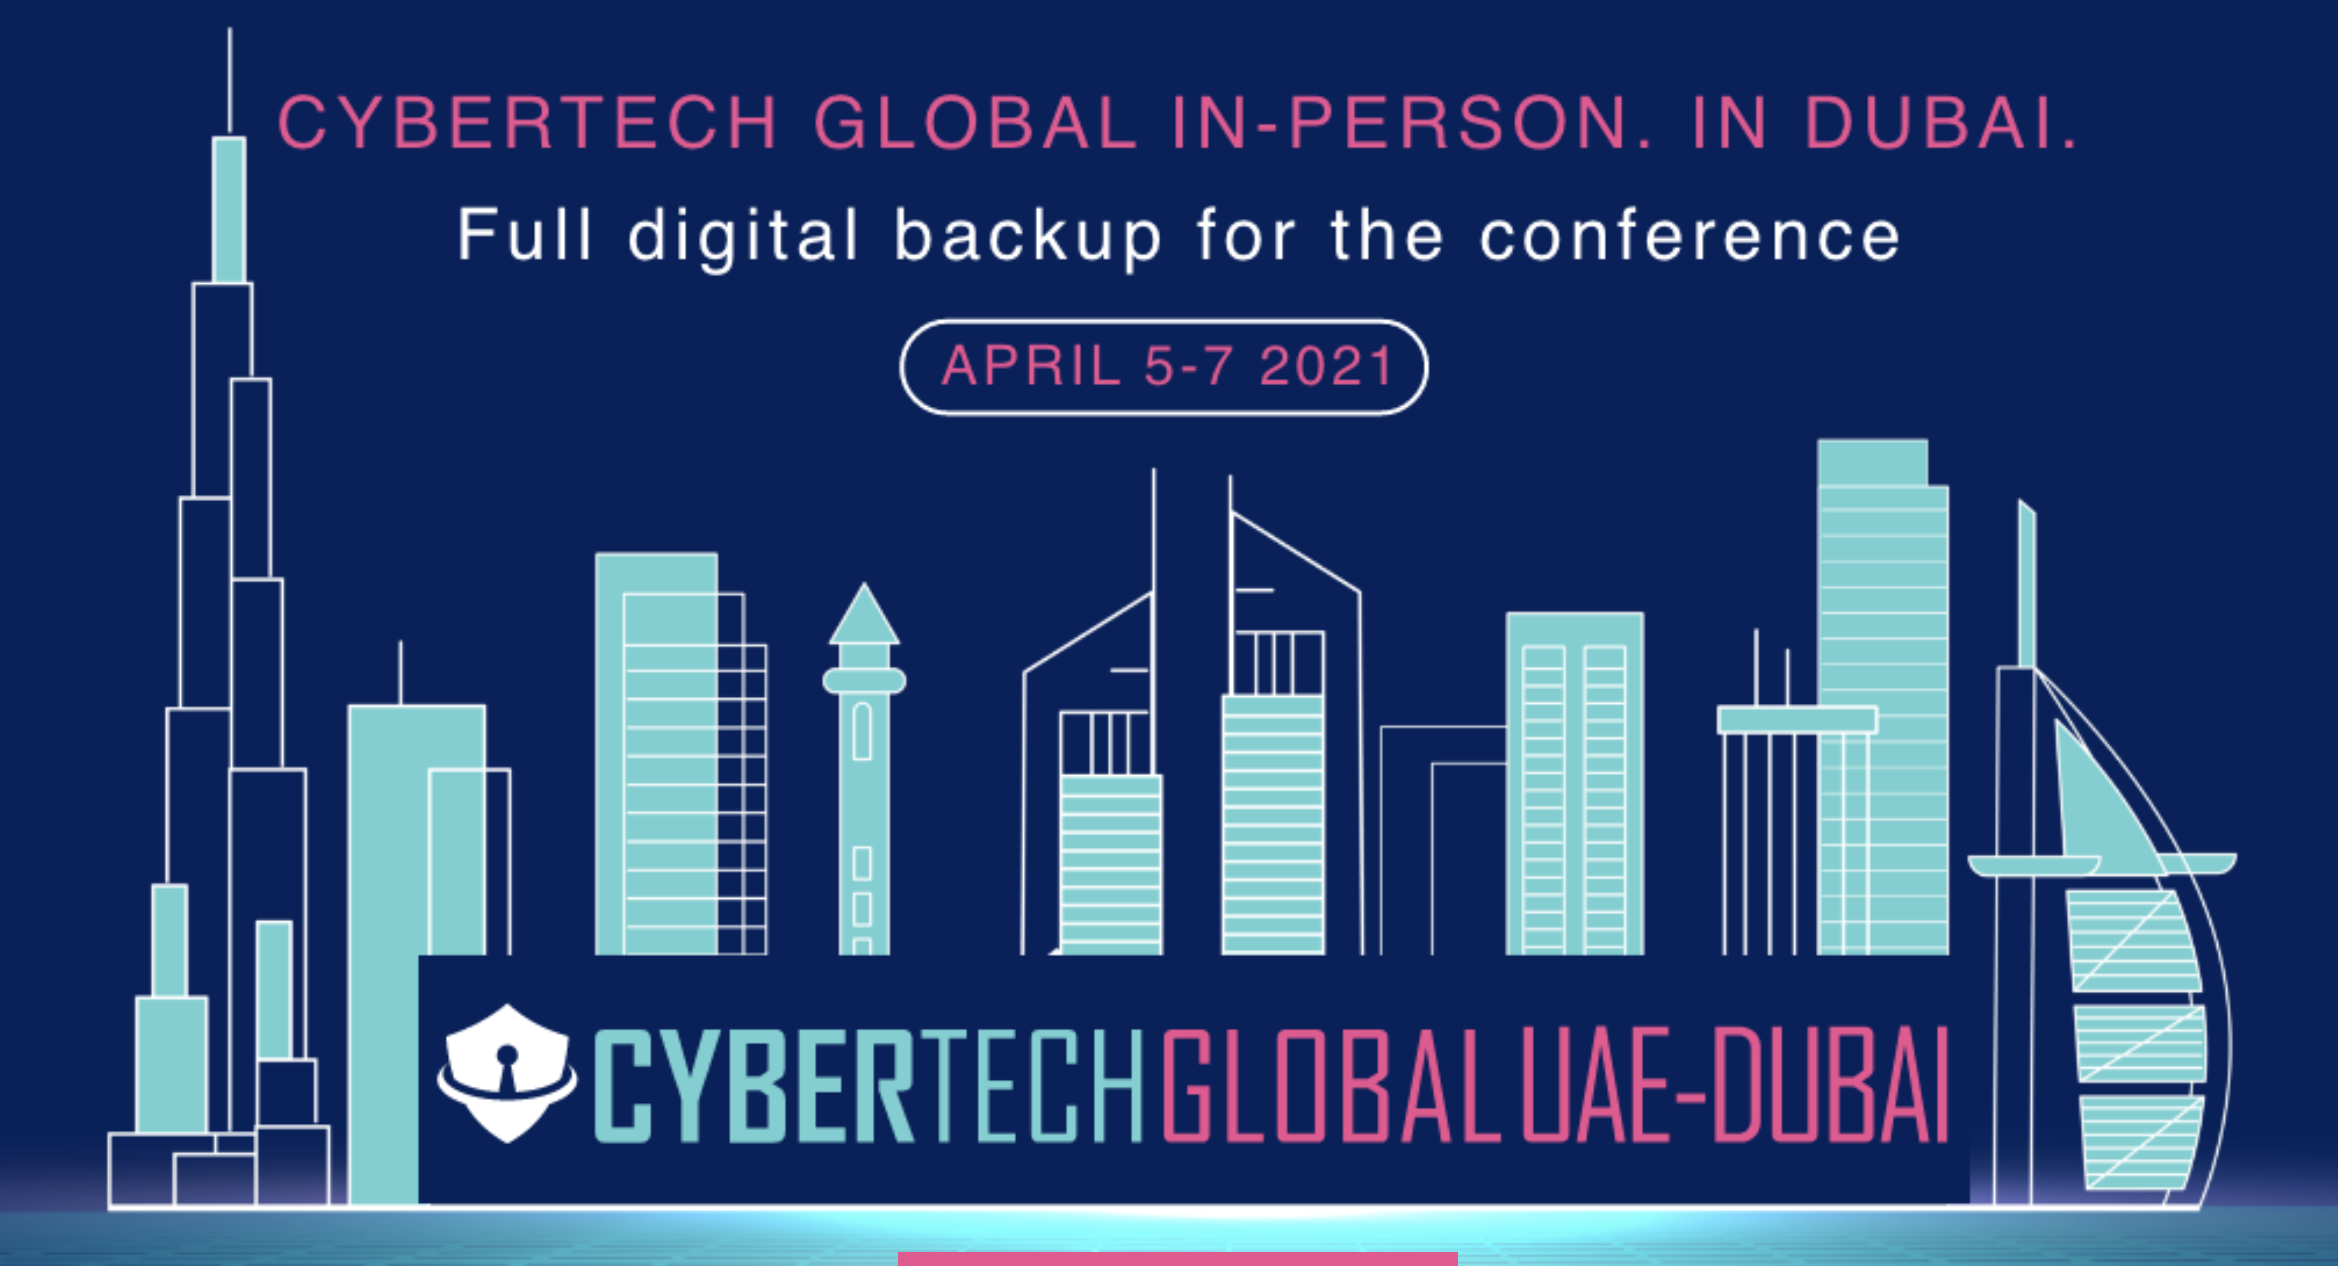 Cybertech Global UAE - Dubai 2021